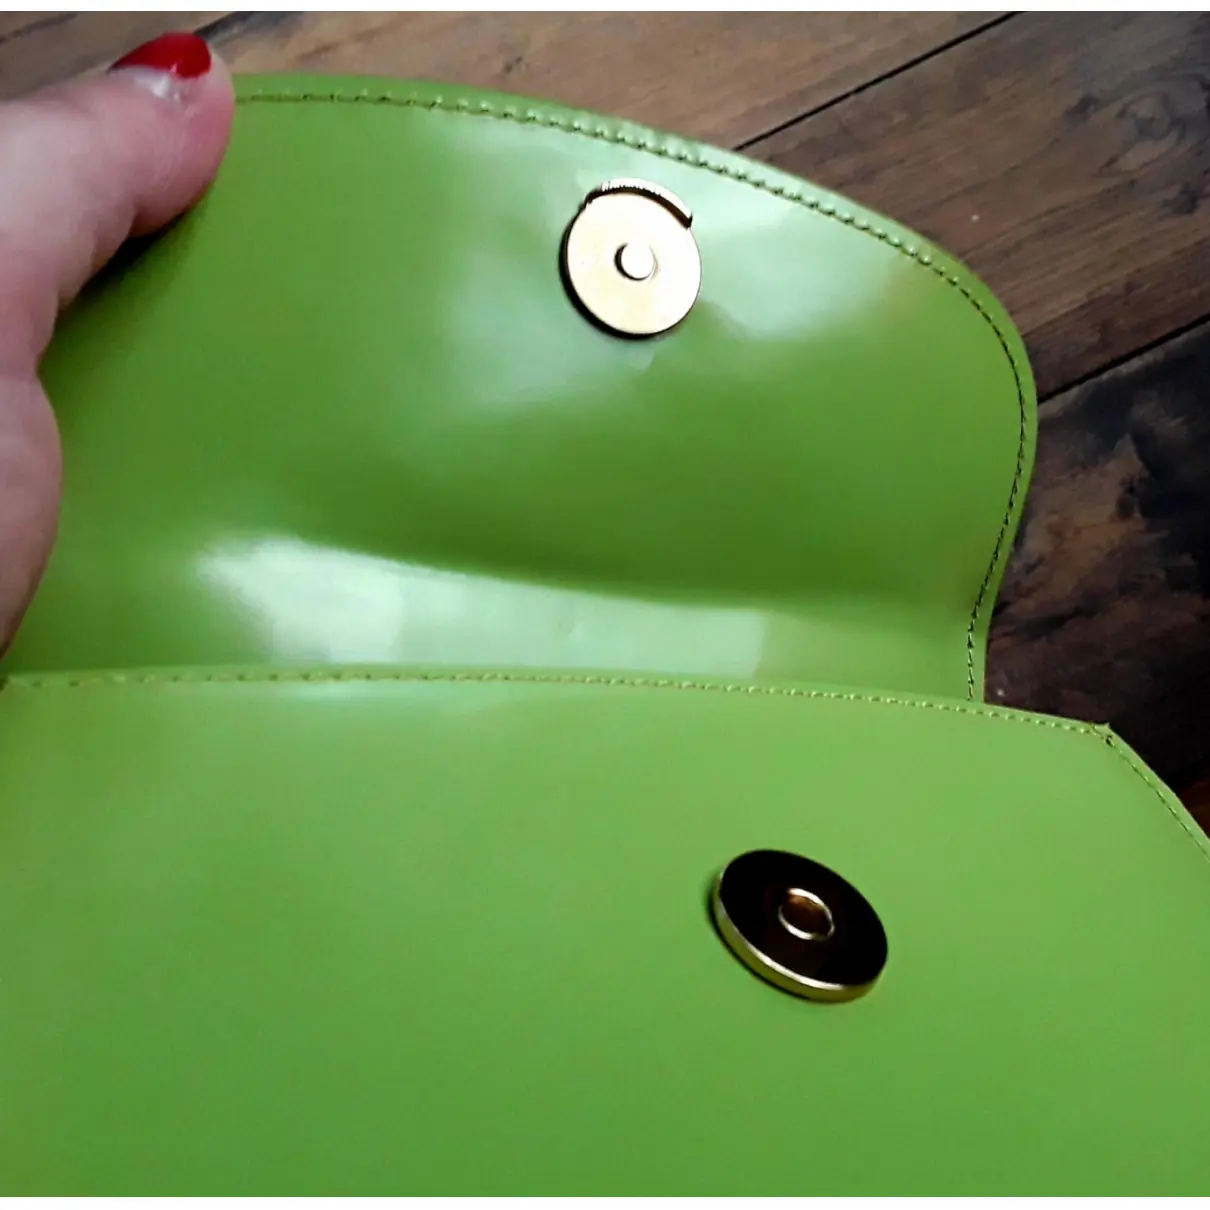 Mini leather handbag By Far